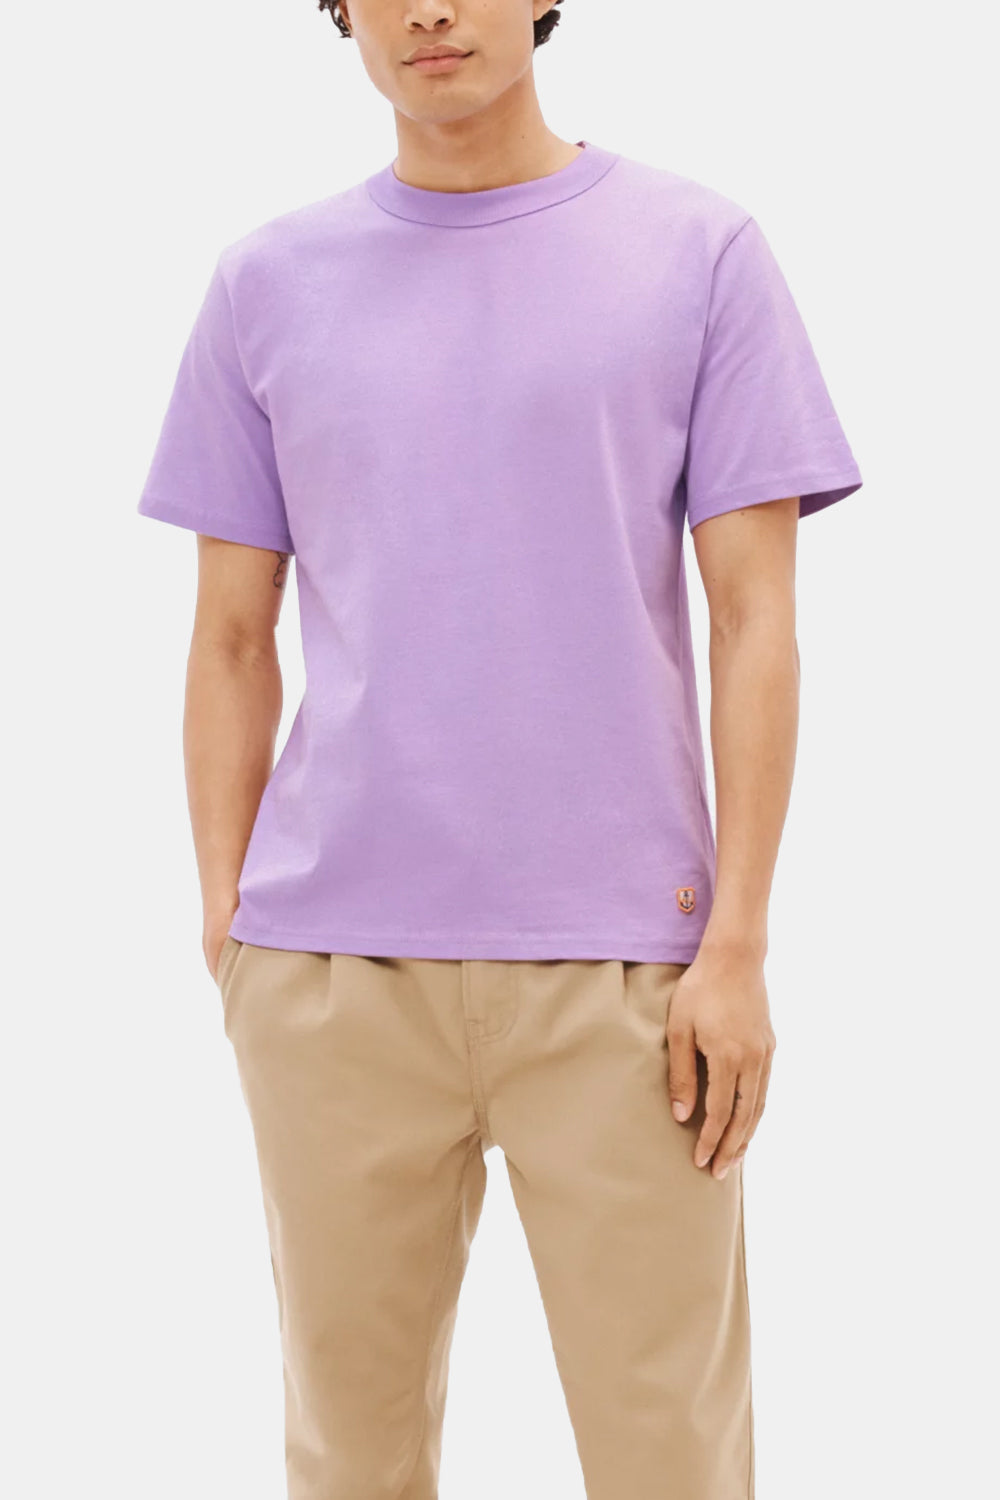 Armor Lux Heritage Organic Callac T-Shirt (Light Purple)